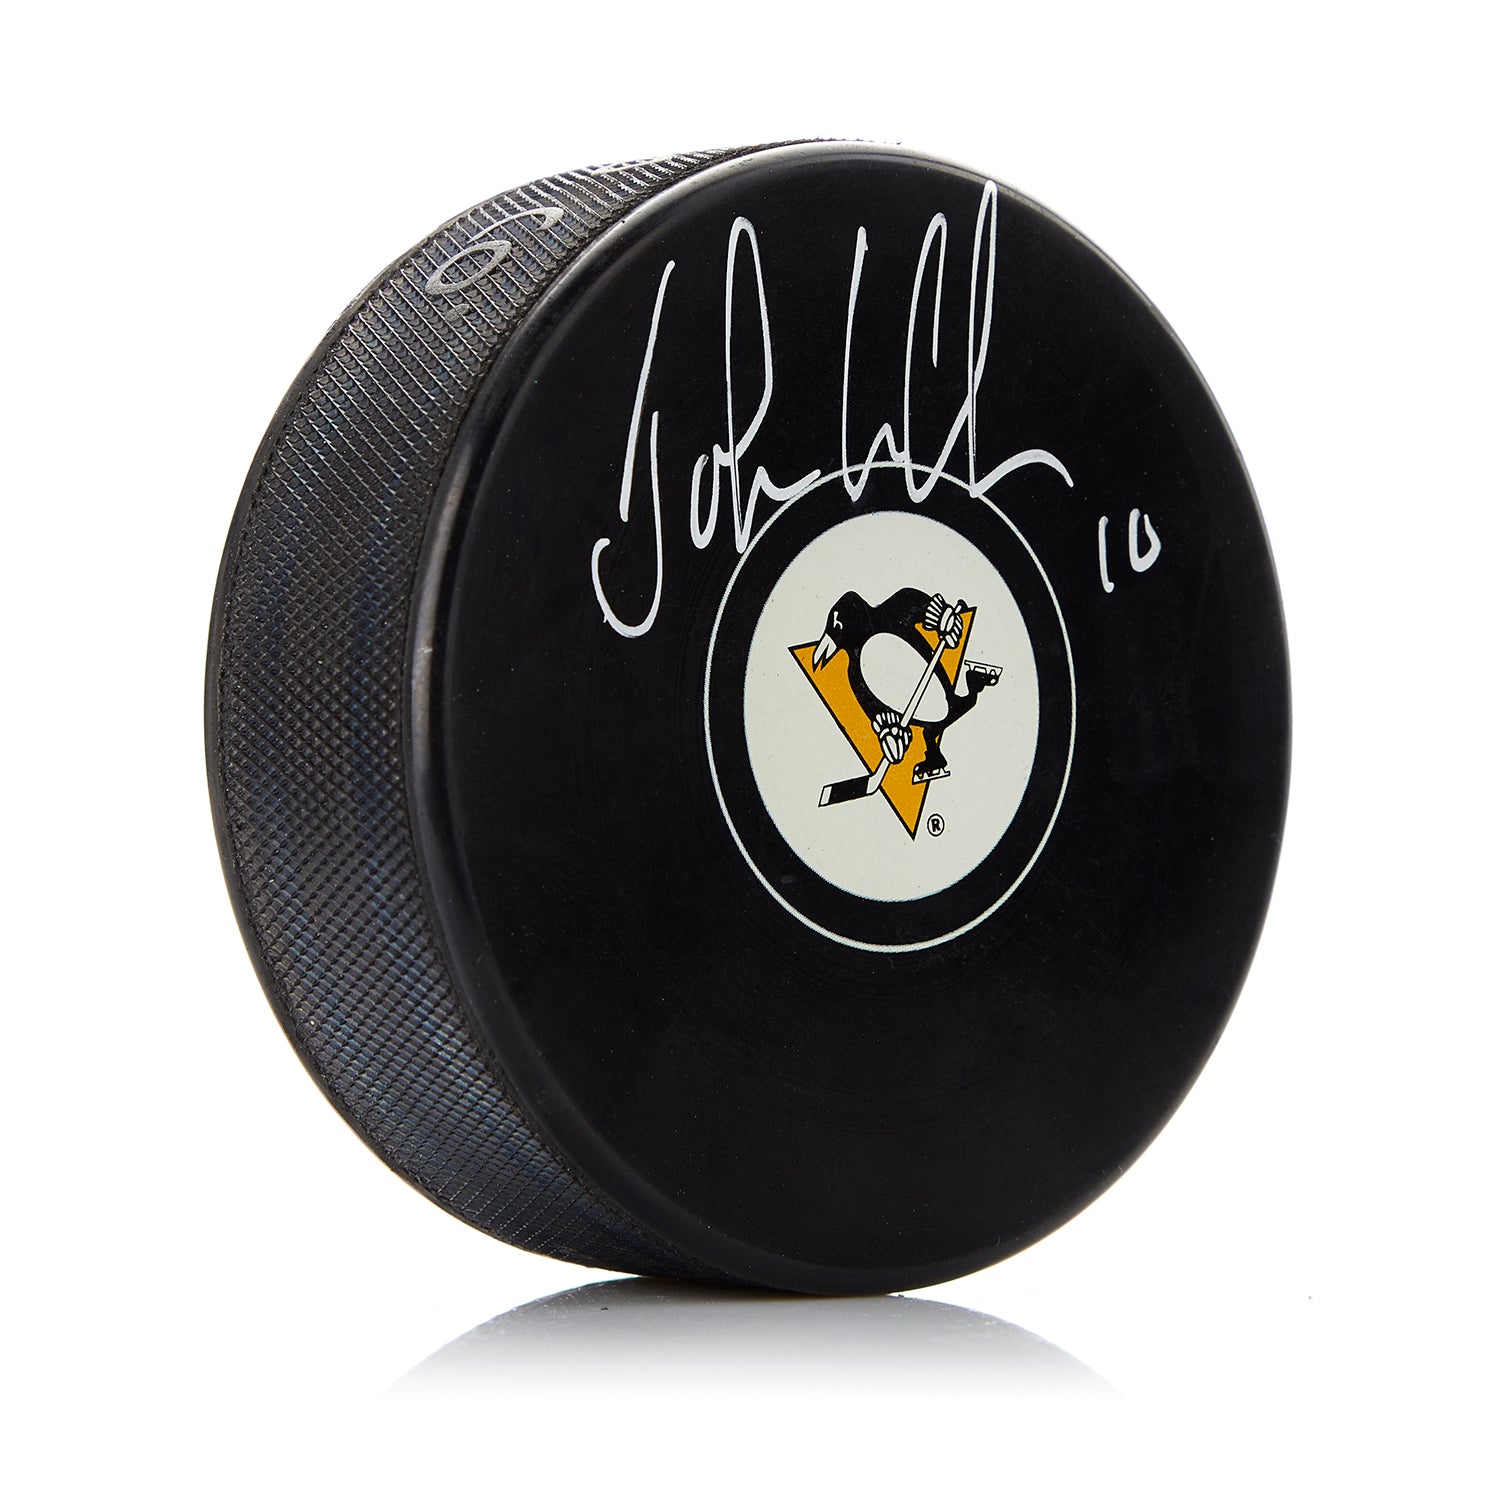 John LeClair Pittsburgh Penguins Autographed Hockey Puck